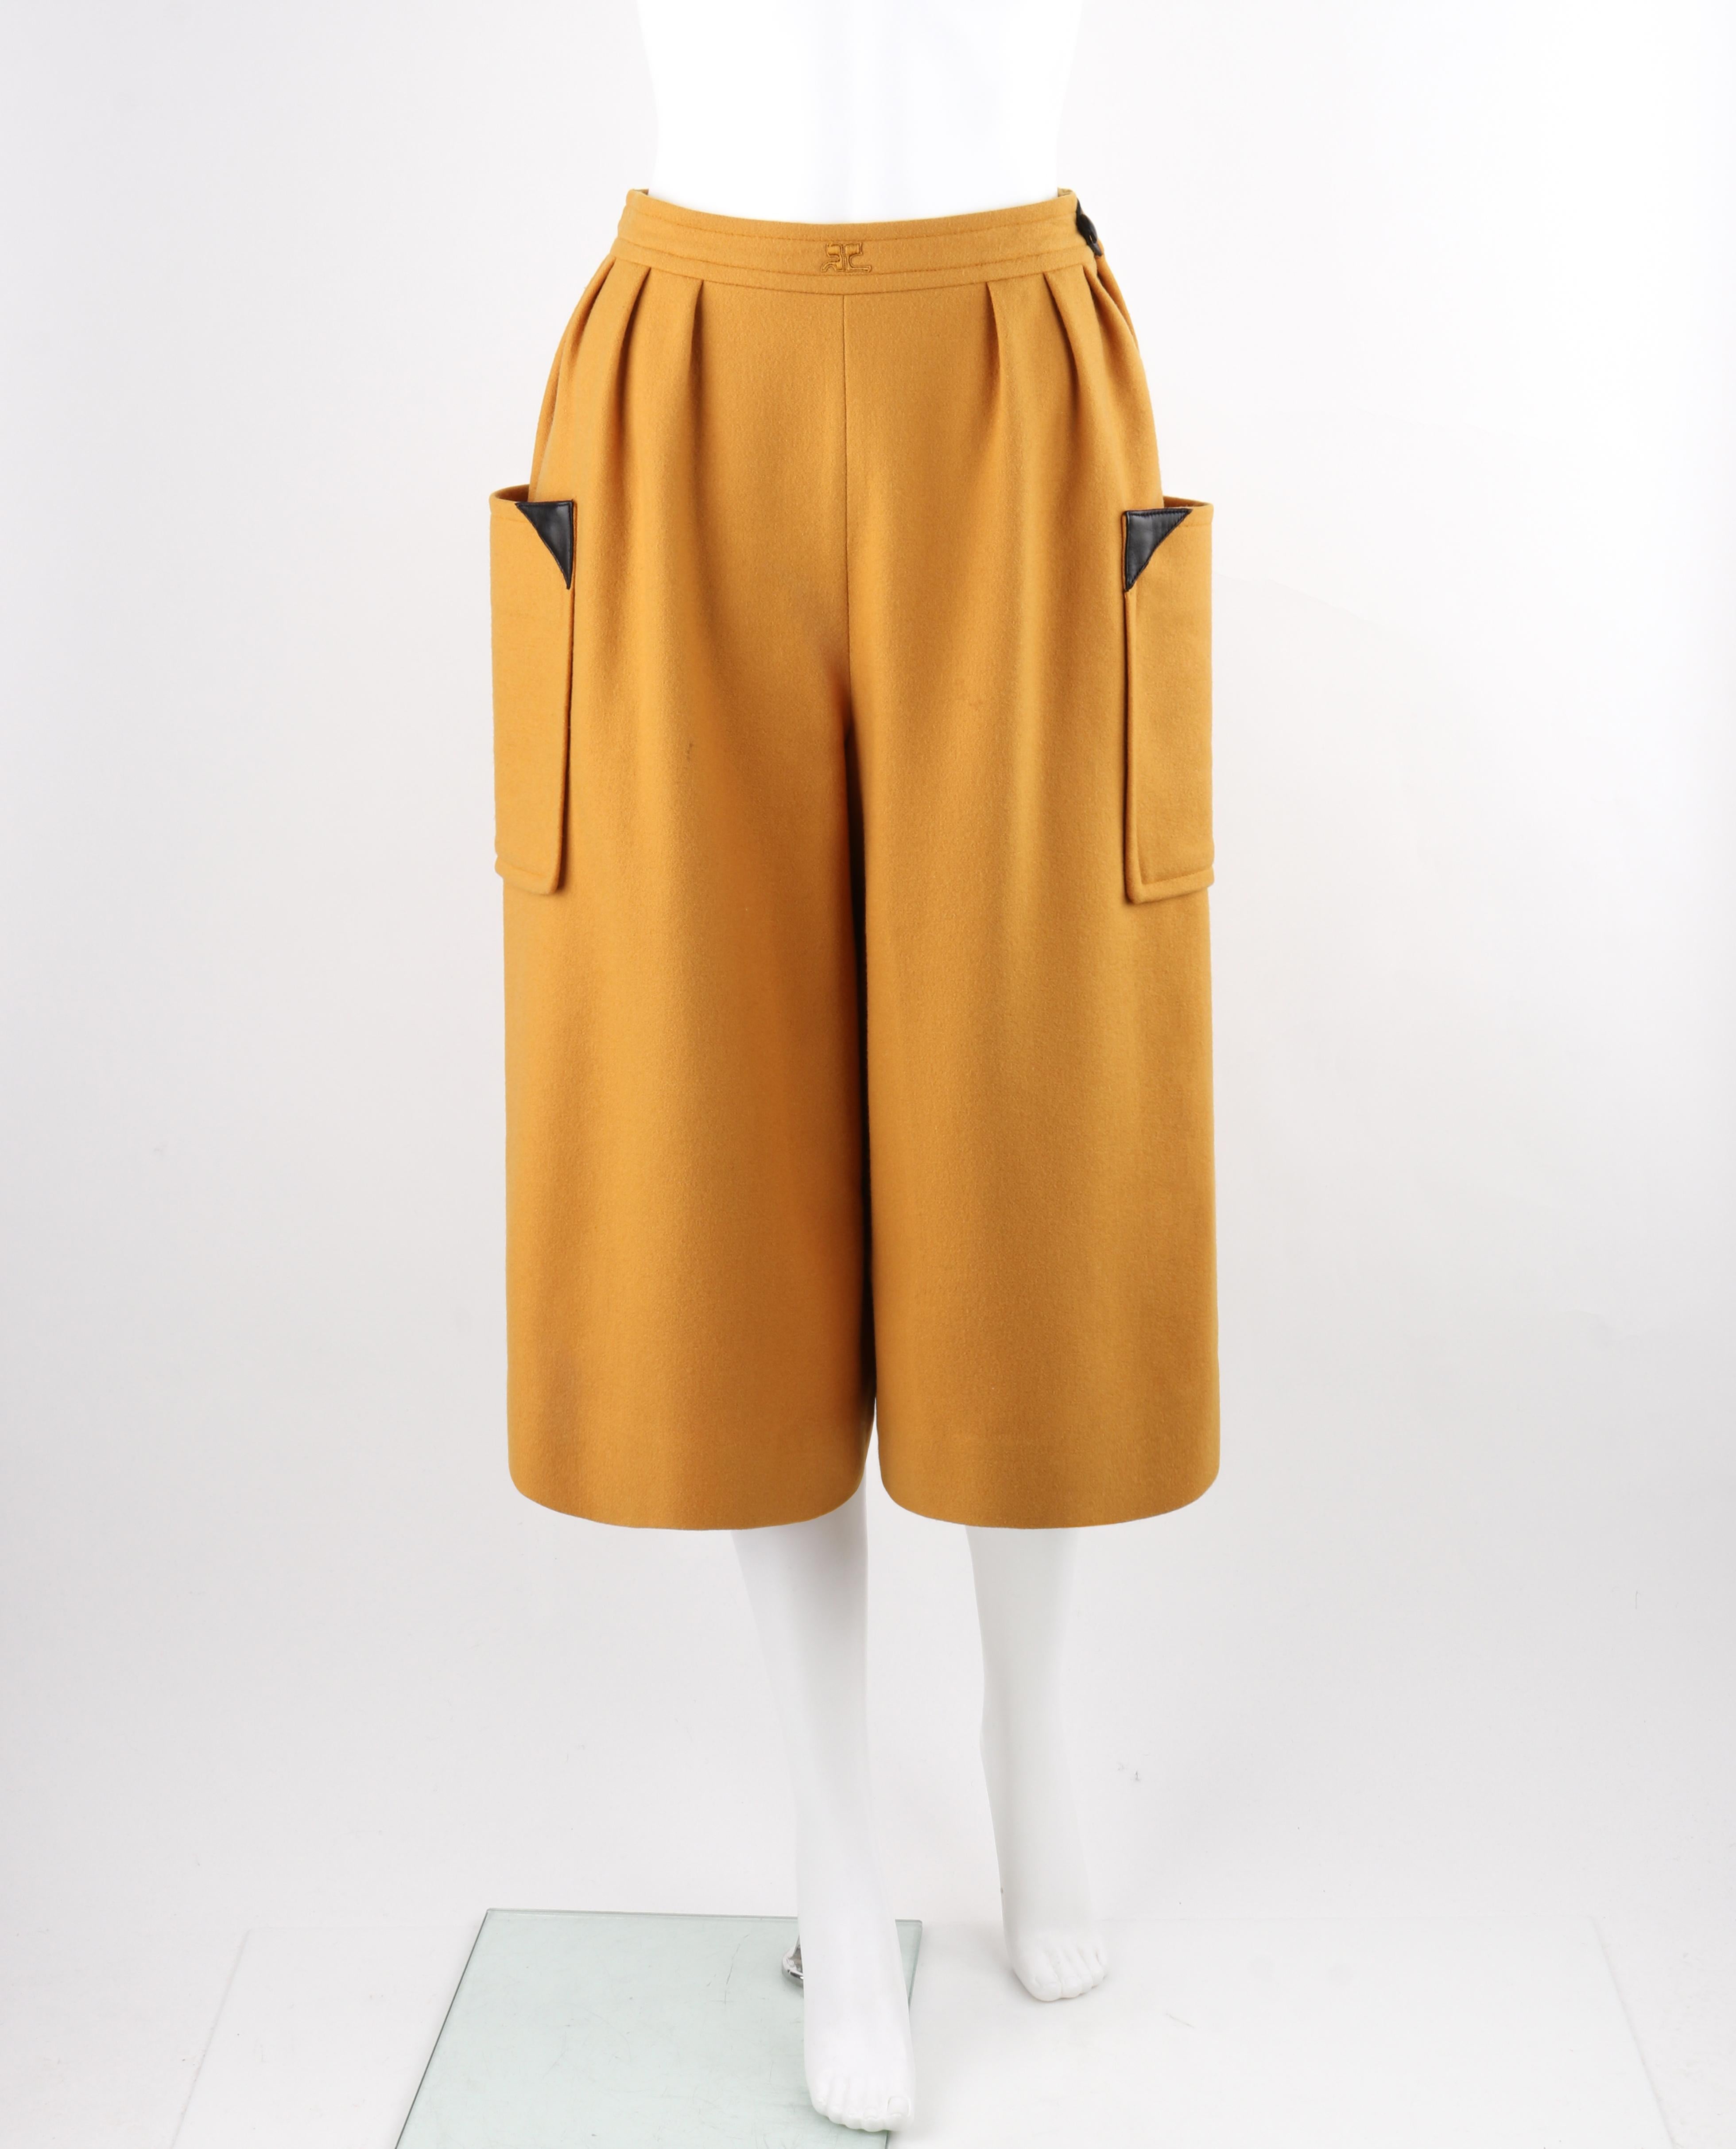 COURREGES PARIS c.1980's Vtg Yellow Wool Cashmere Pleated Wide Leg Capri Pants

Brand / Manufacturer: Courreges Paris
Circa: 1980's
Designer: Andre Courreges
Style: Capri Pants
Color(s): Yellow, Black
Lined: Yes
Marked Fabric: 